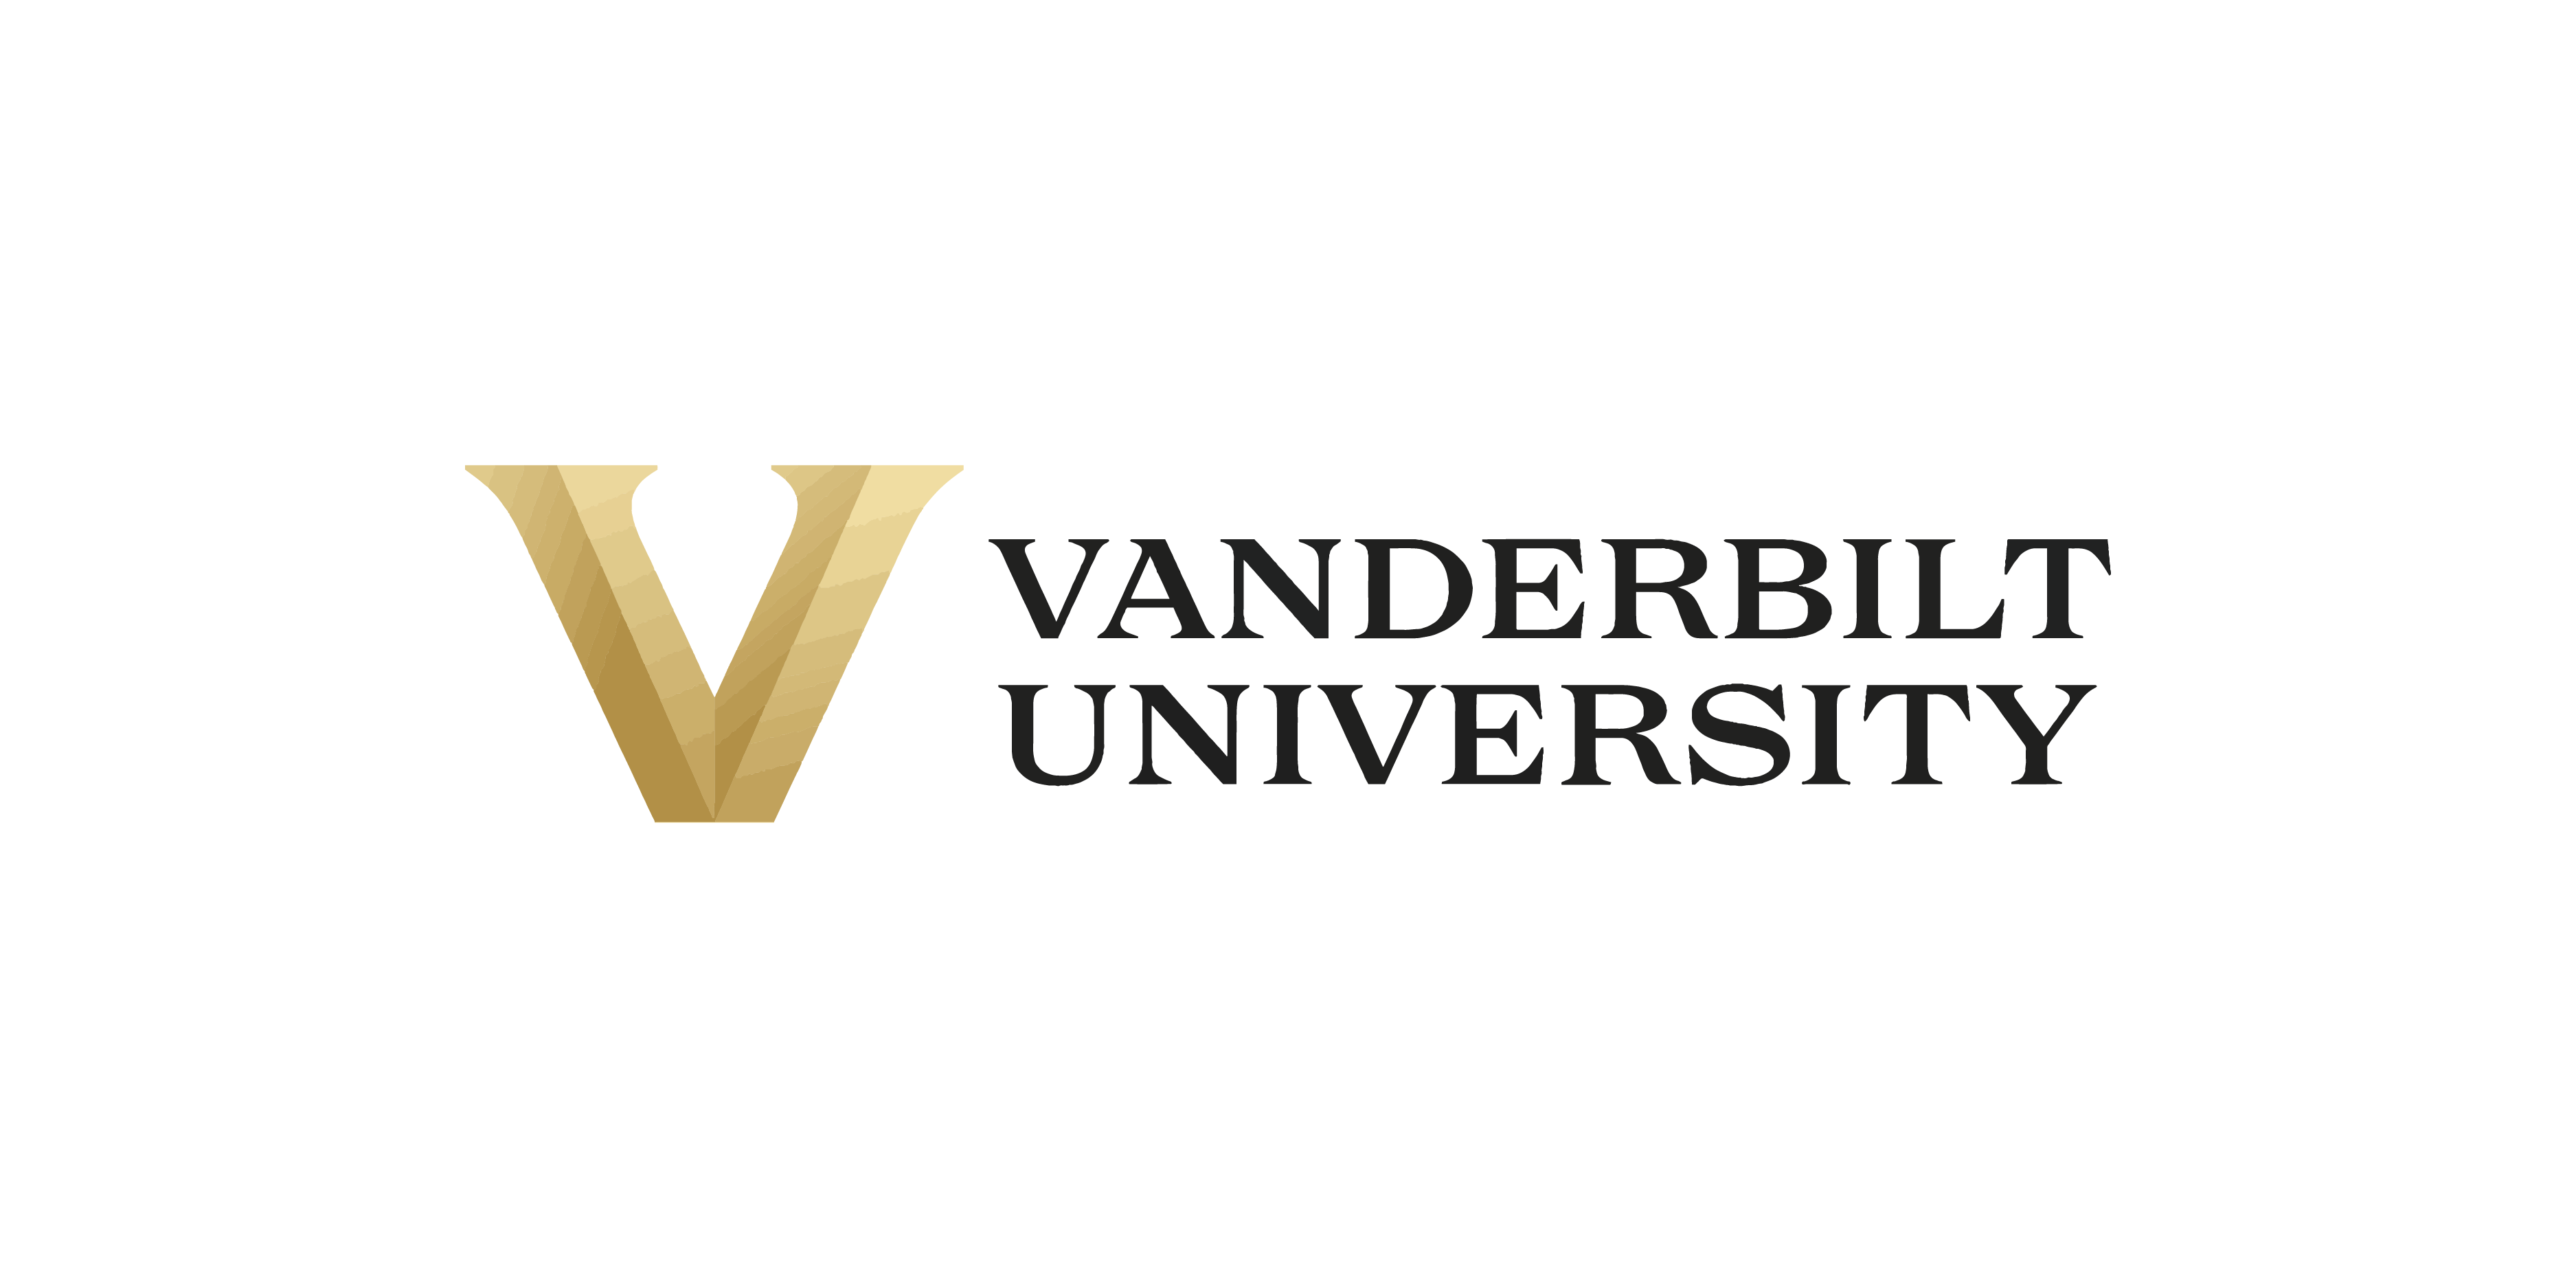 Center for Research on Men's Health at Vanderbilt University